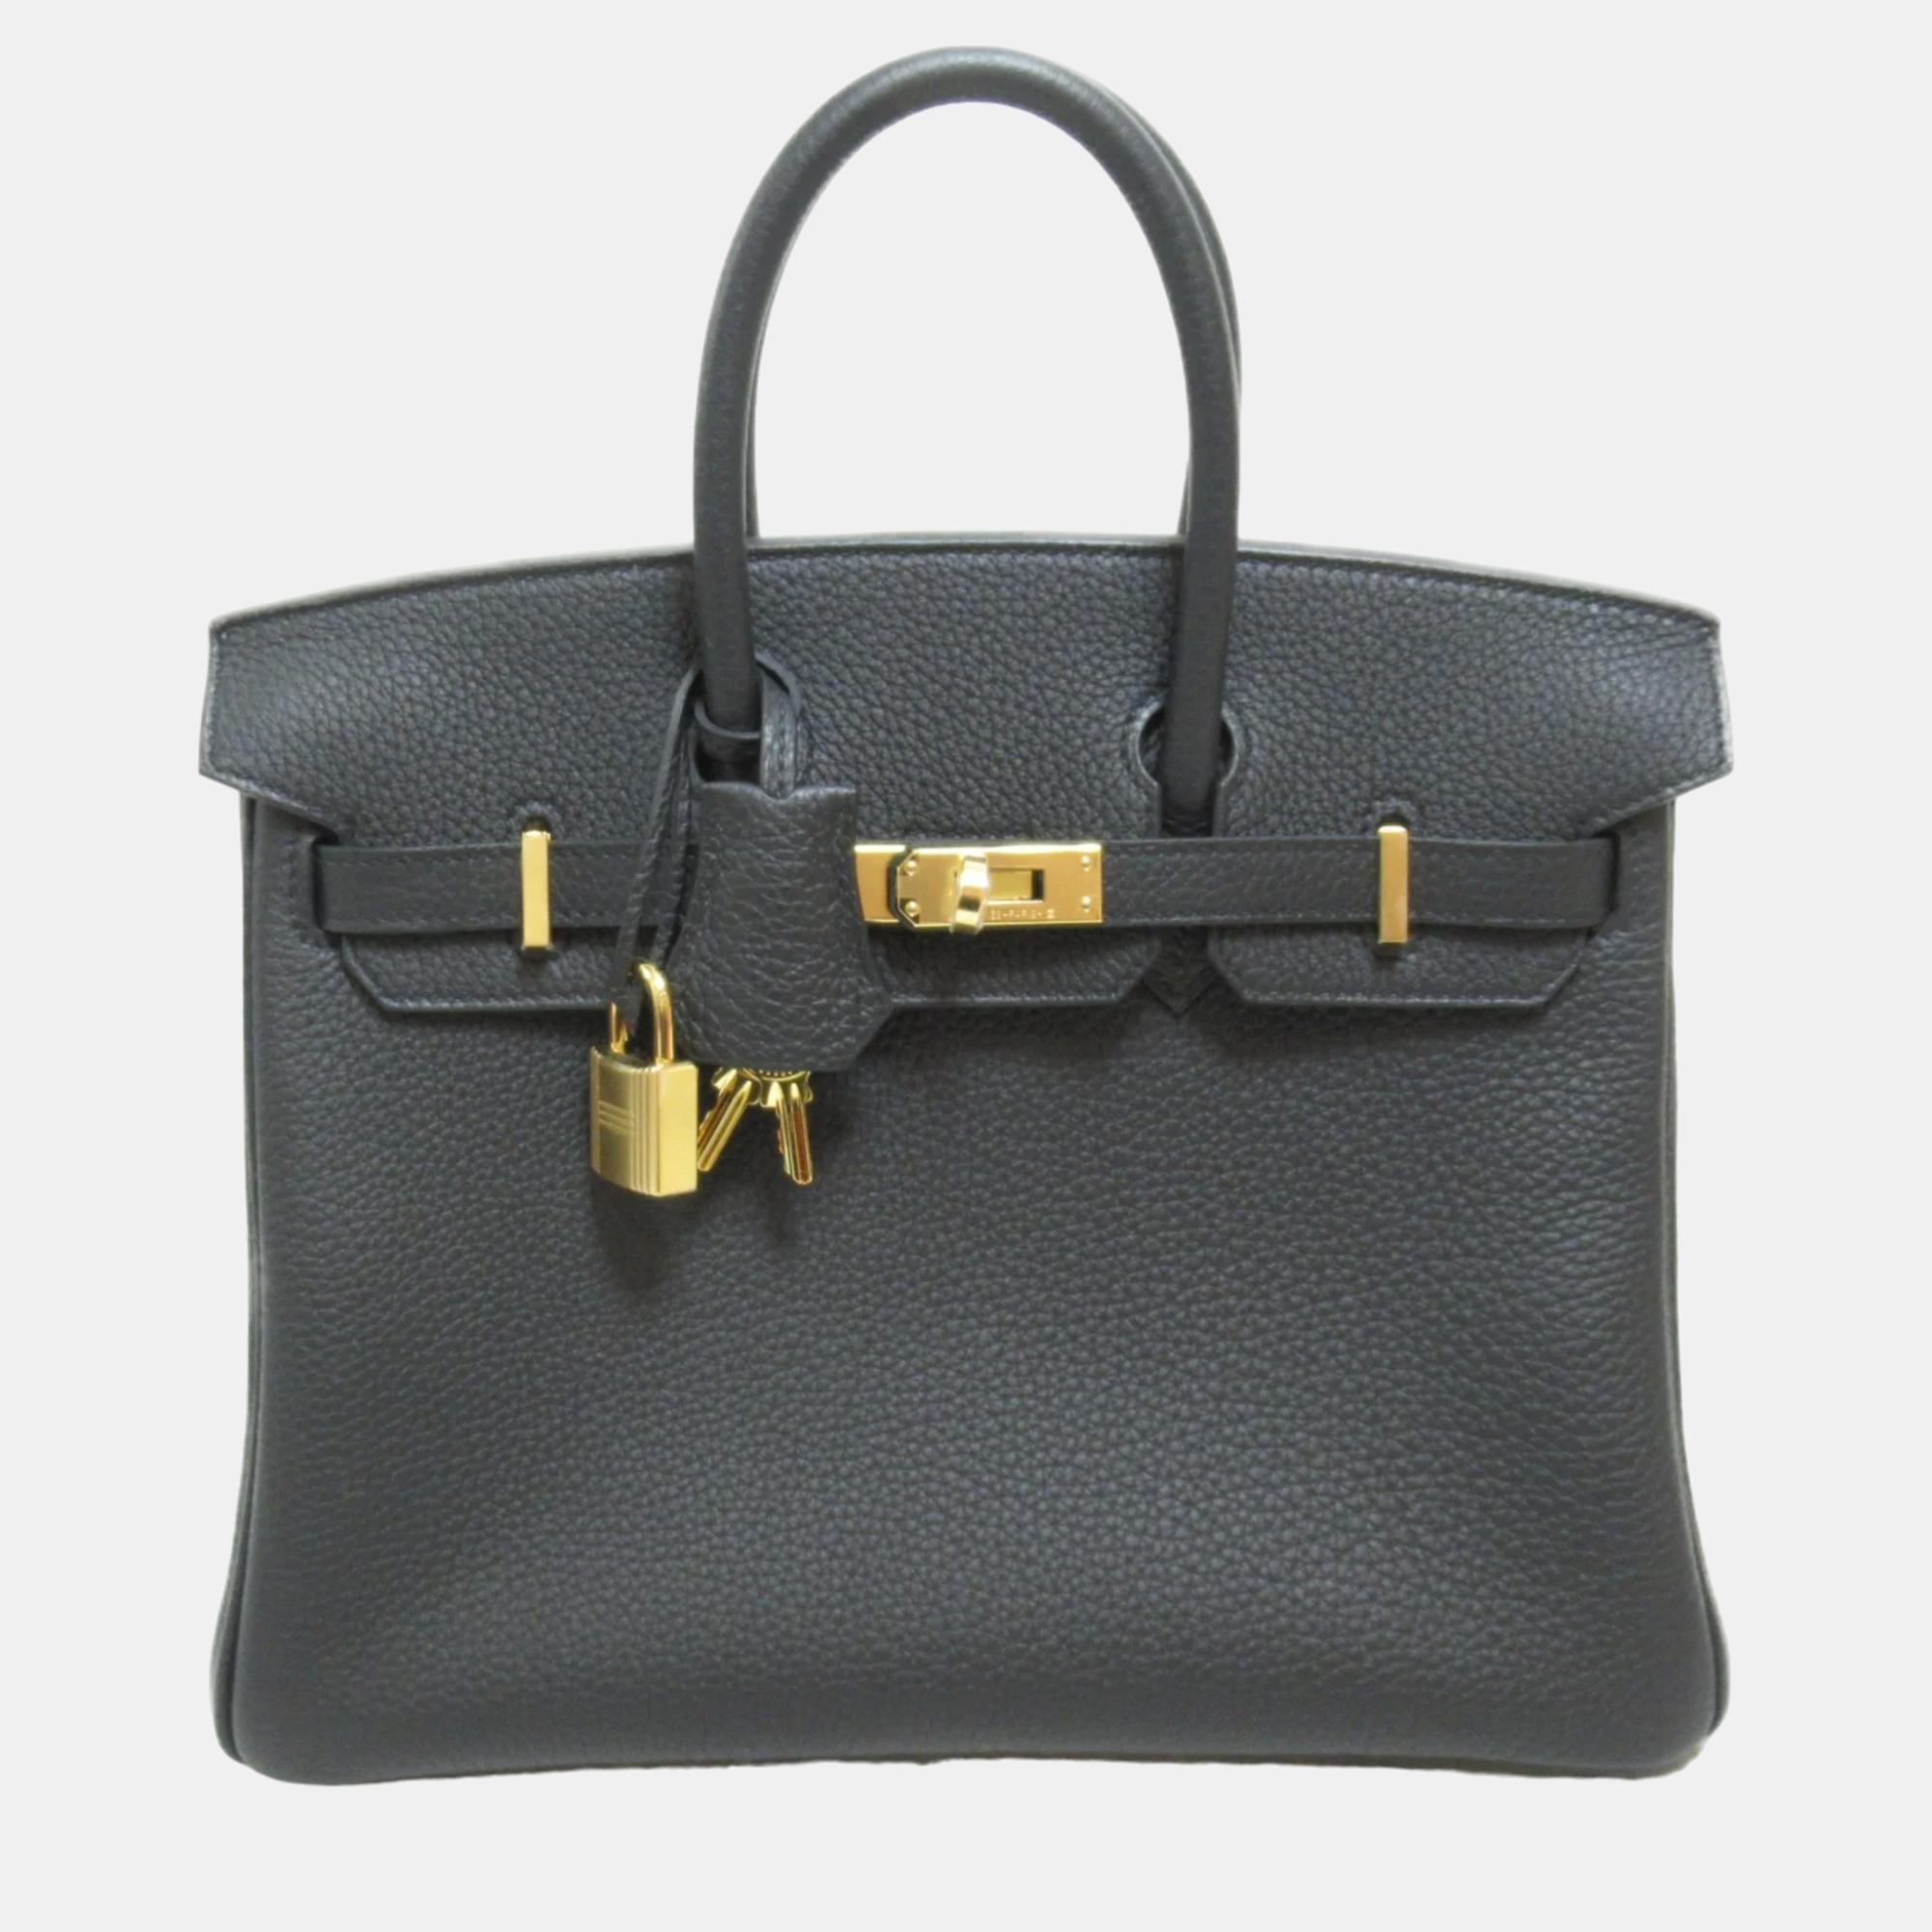 Hermes black togo leather birkin handbag